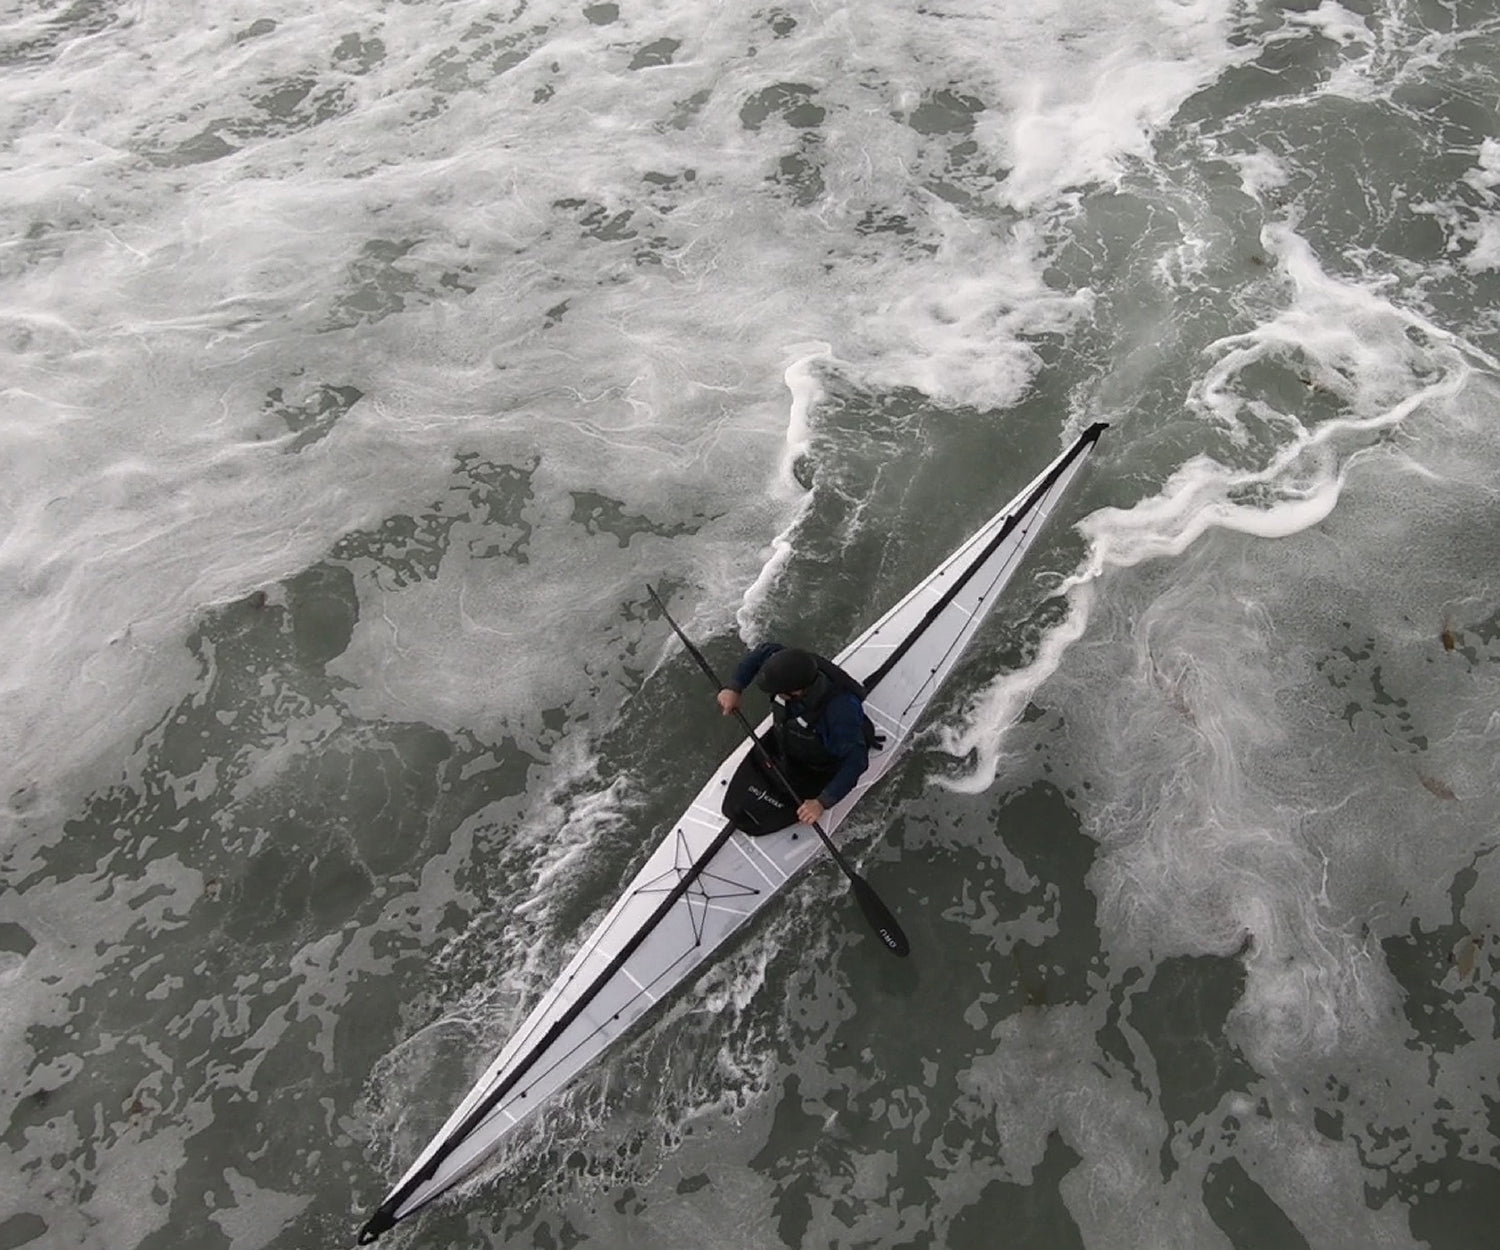 Oru - Folding Kayak - Coast XT, Length: 16'2", 32 Lbs, 400 Lbs Capacity Starter Bundle (Paddle Included!)